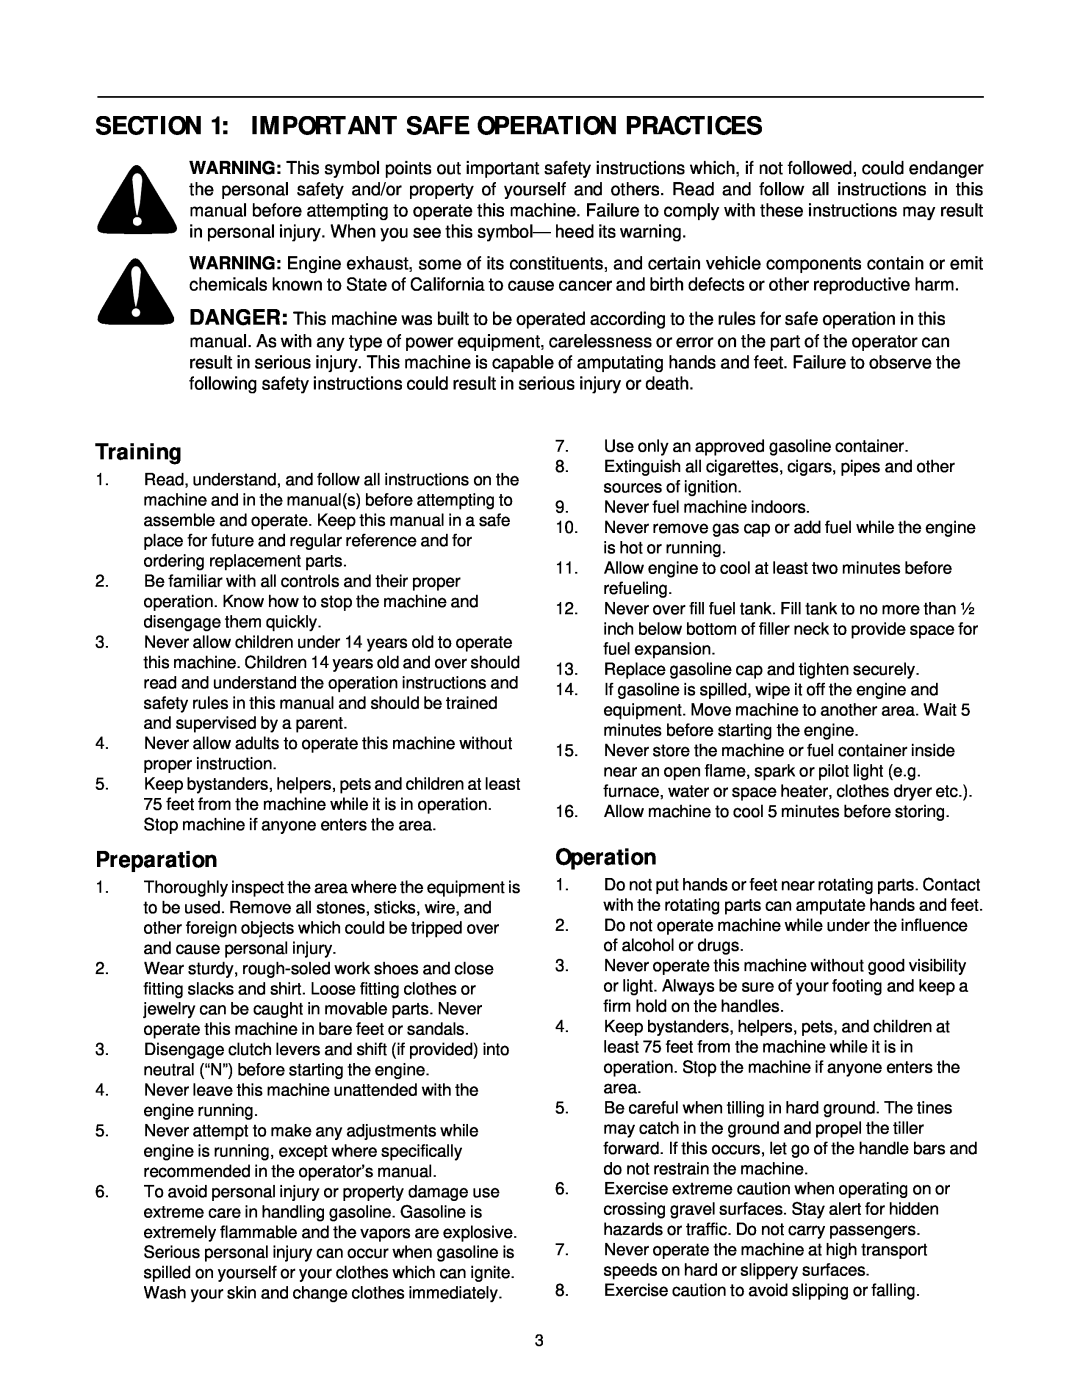 MTD 340 Thru 390 manual Important Safe Operation Practices, Training, Preparation 